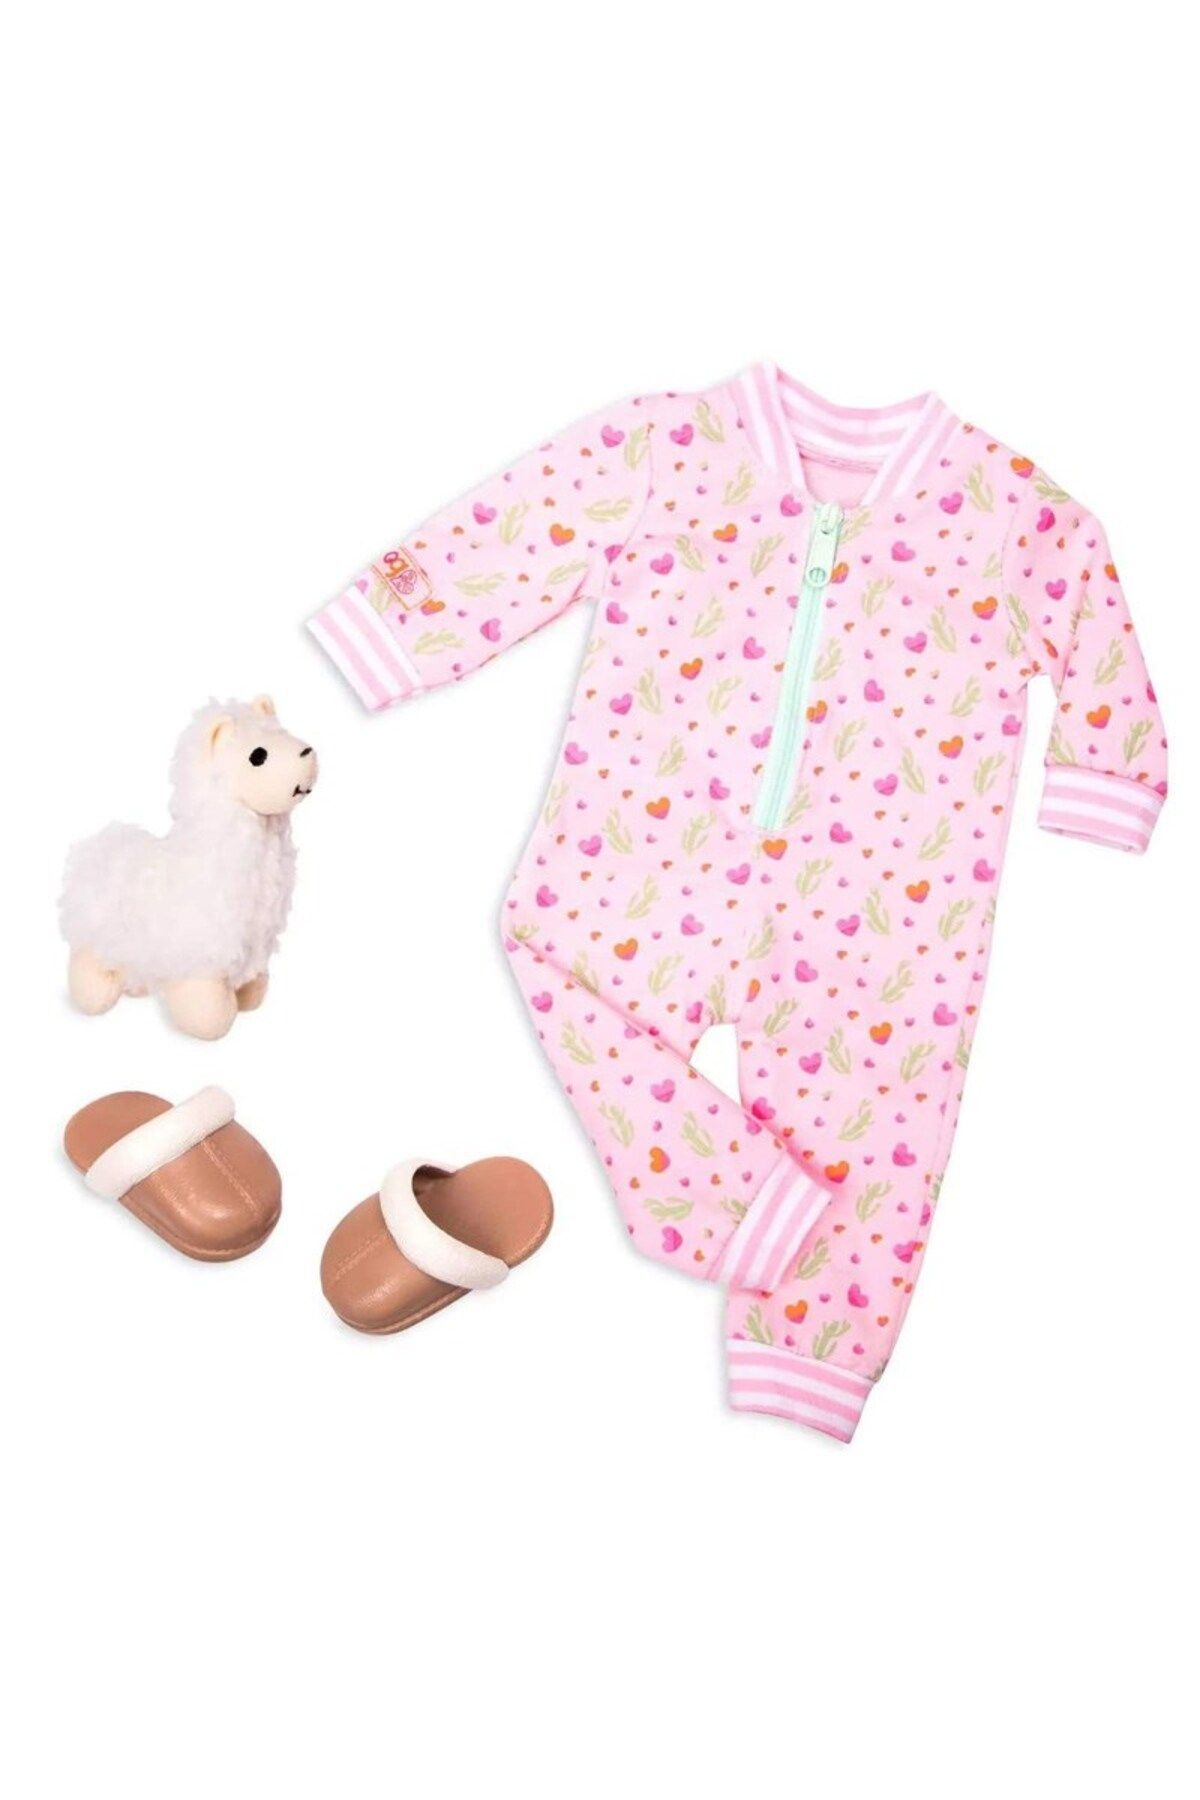 Our Generation Llama Pijama 46 cm Oyuncak Bebek Kıyafet Seti